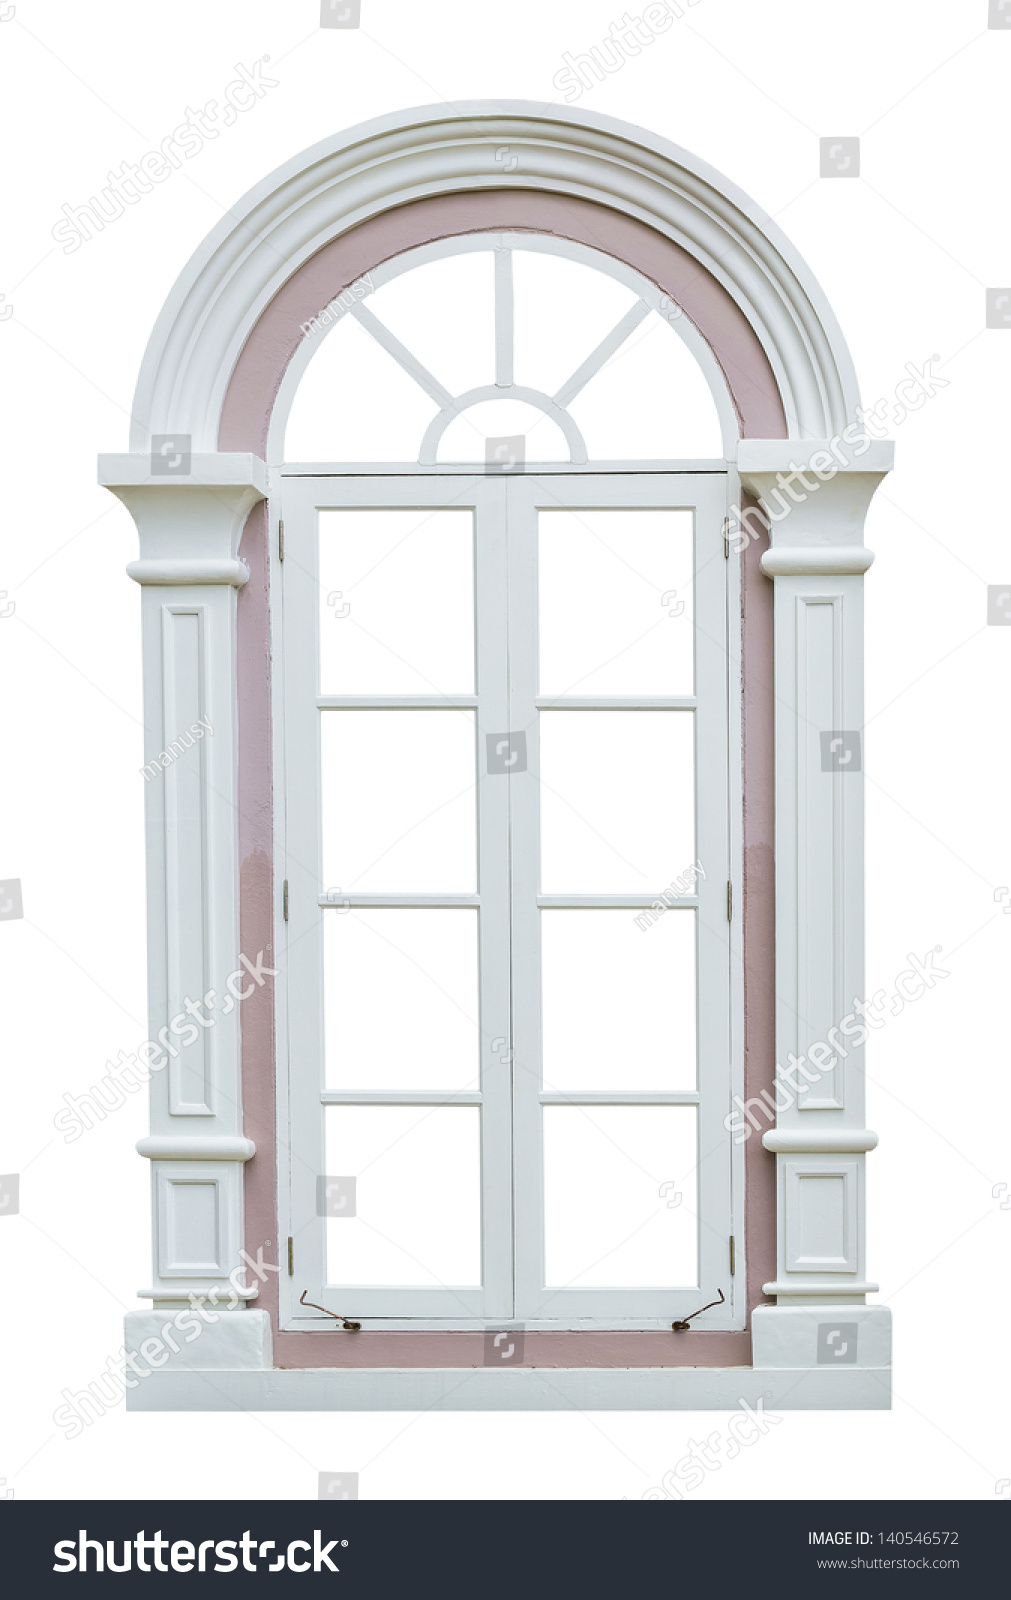 Classic Window Frame Isolated On White Background 库存照片 140546572